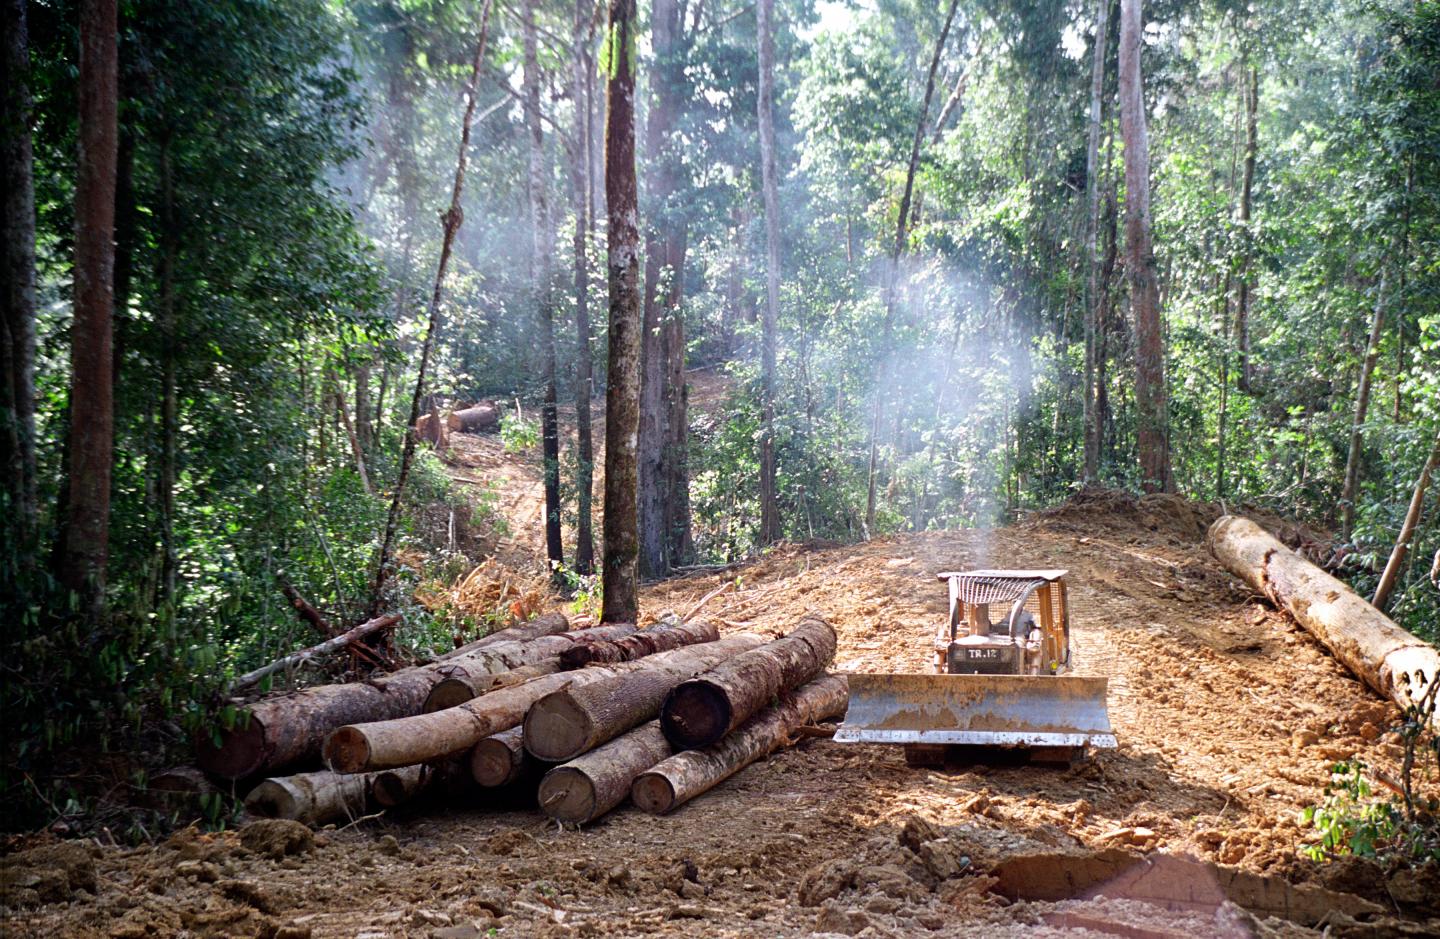 Logging in Rainforest